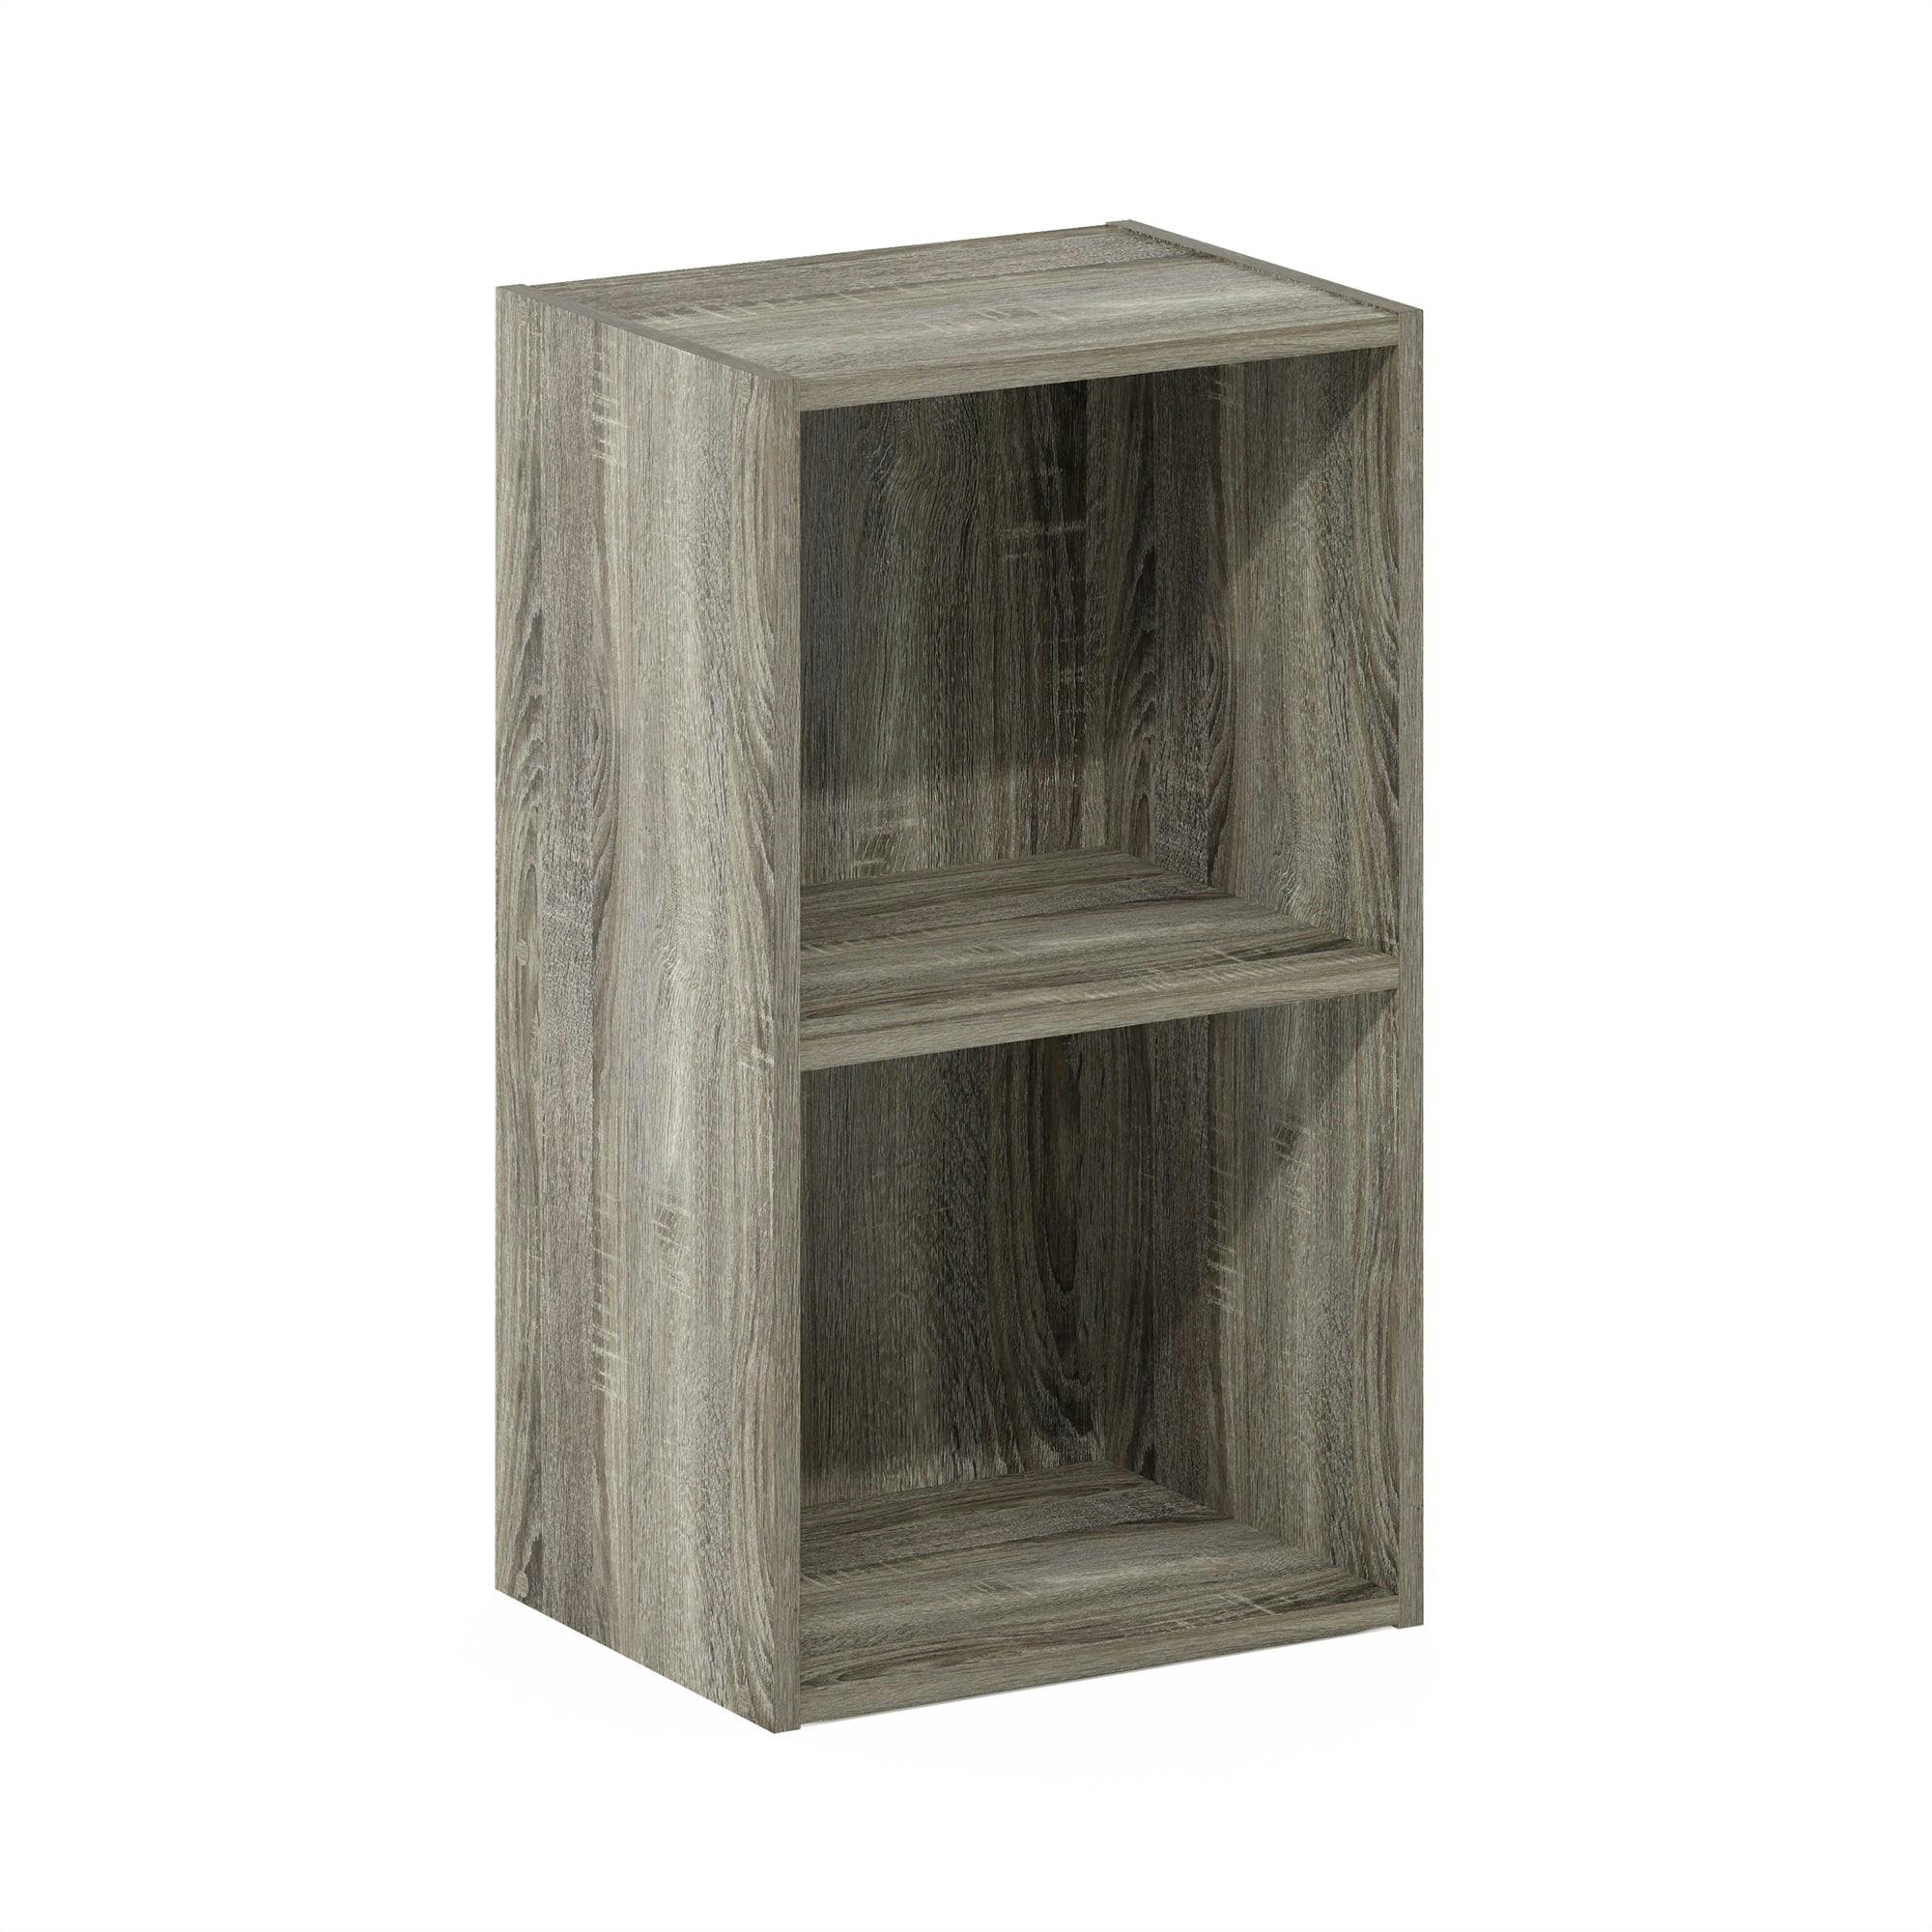 Minimalist White Wood Cube Display Shelf, 12x26 in